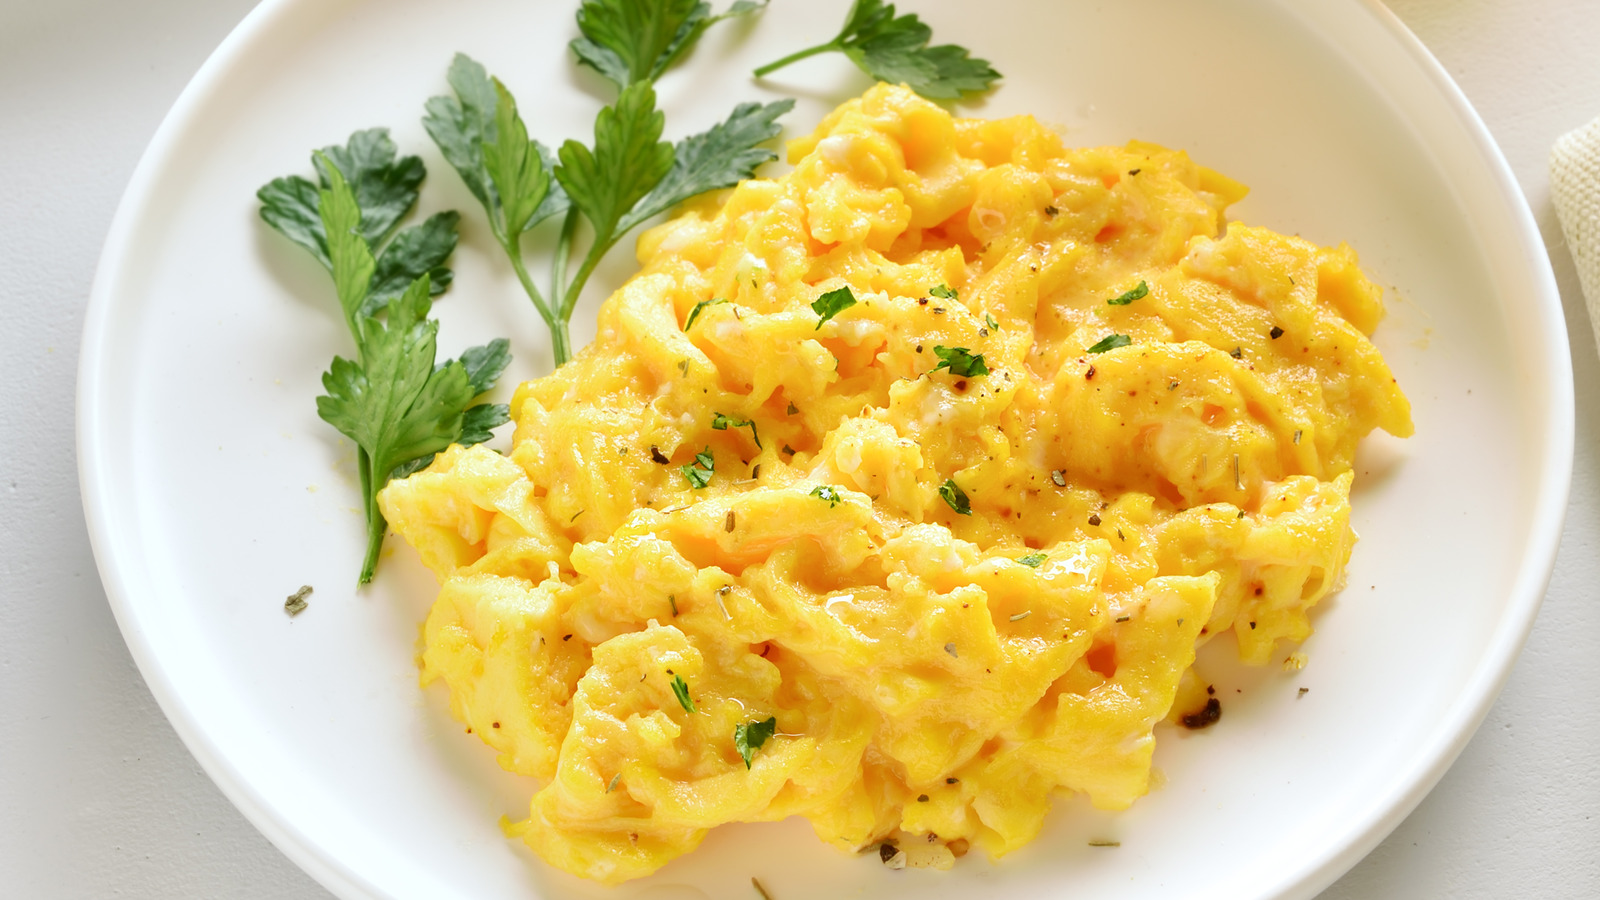 https://www.tastingtable.com/img/gallery/12-ways-to-make-your-scrambled-eggs-taste-better/l-intro-1680009482.jpg